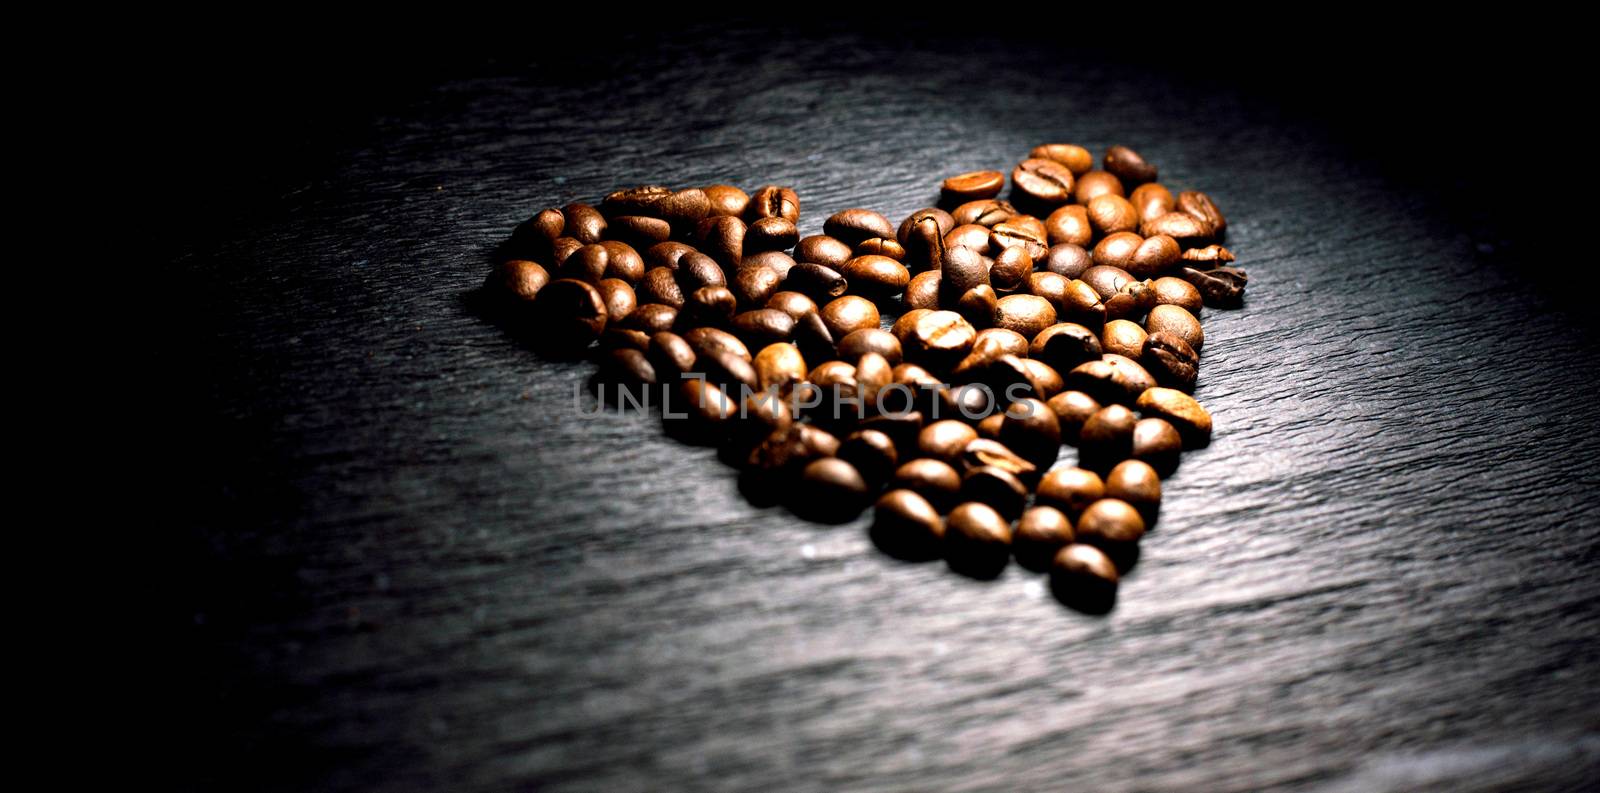 Heart shaped coffee beans